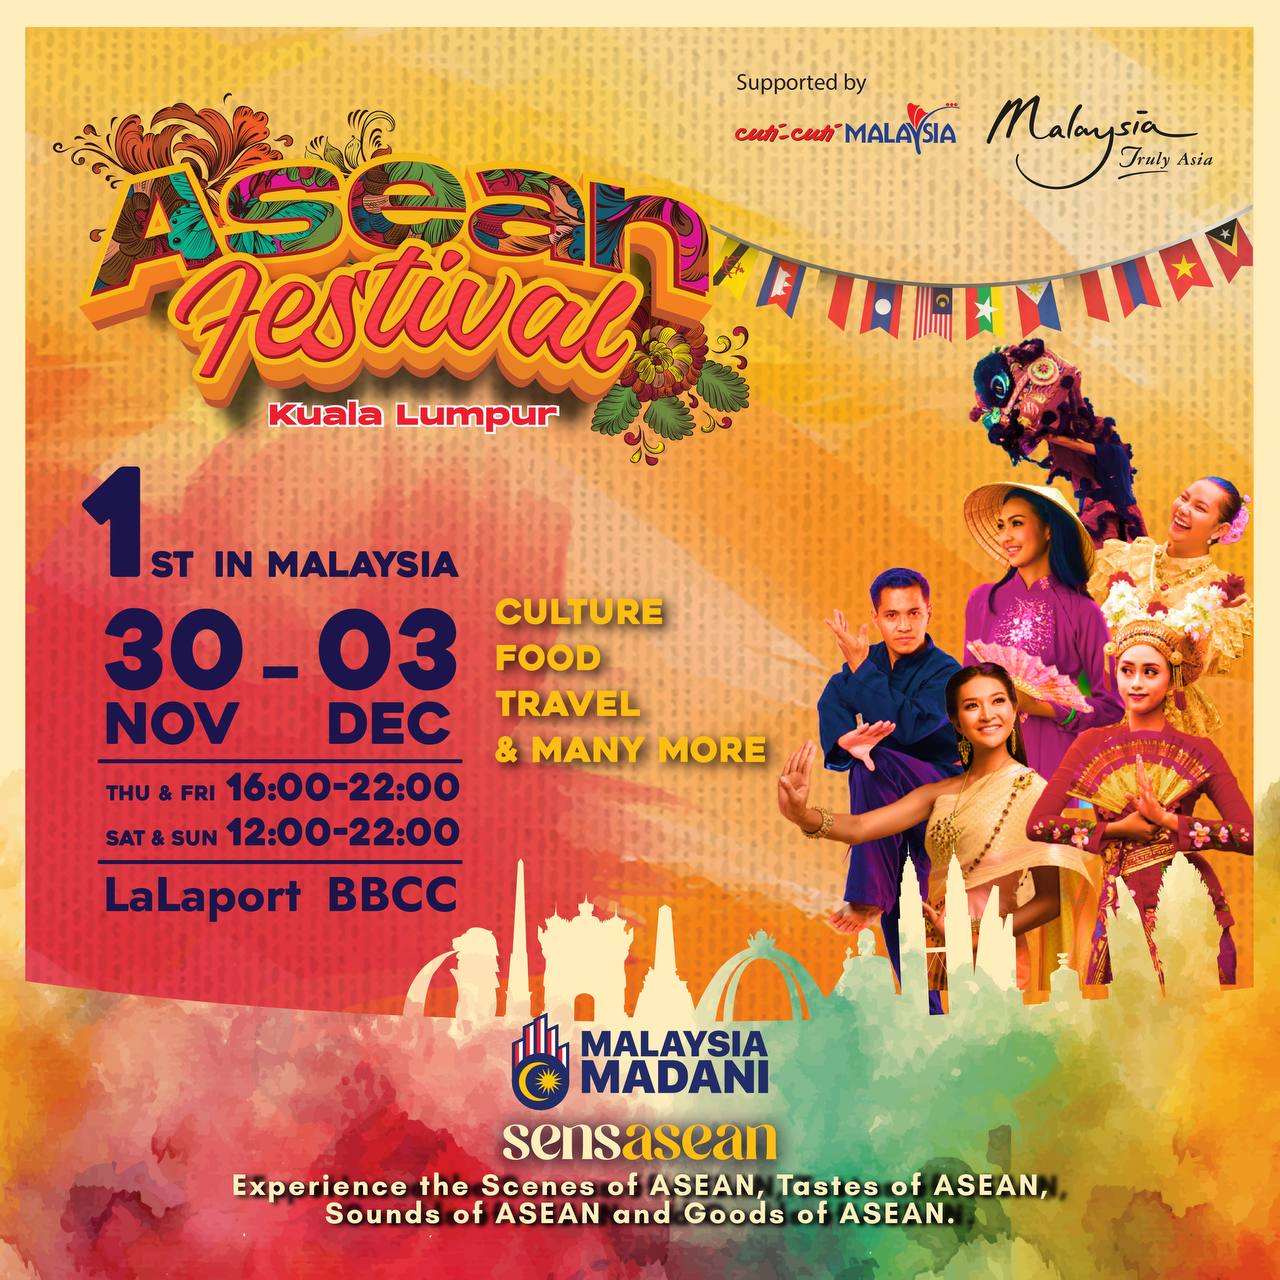 About Asean Festival - Event Details